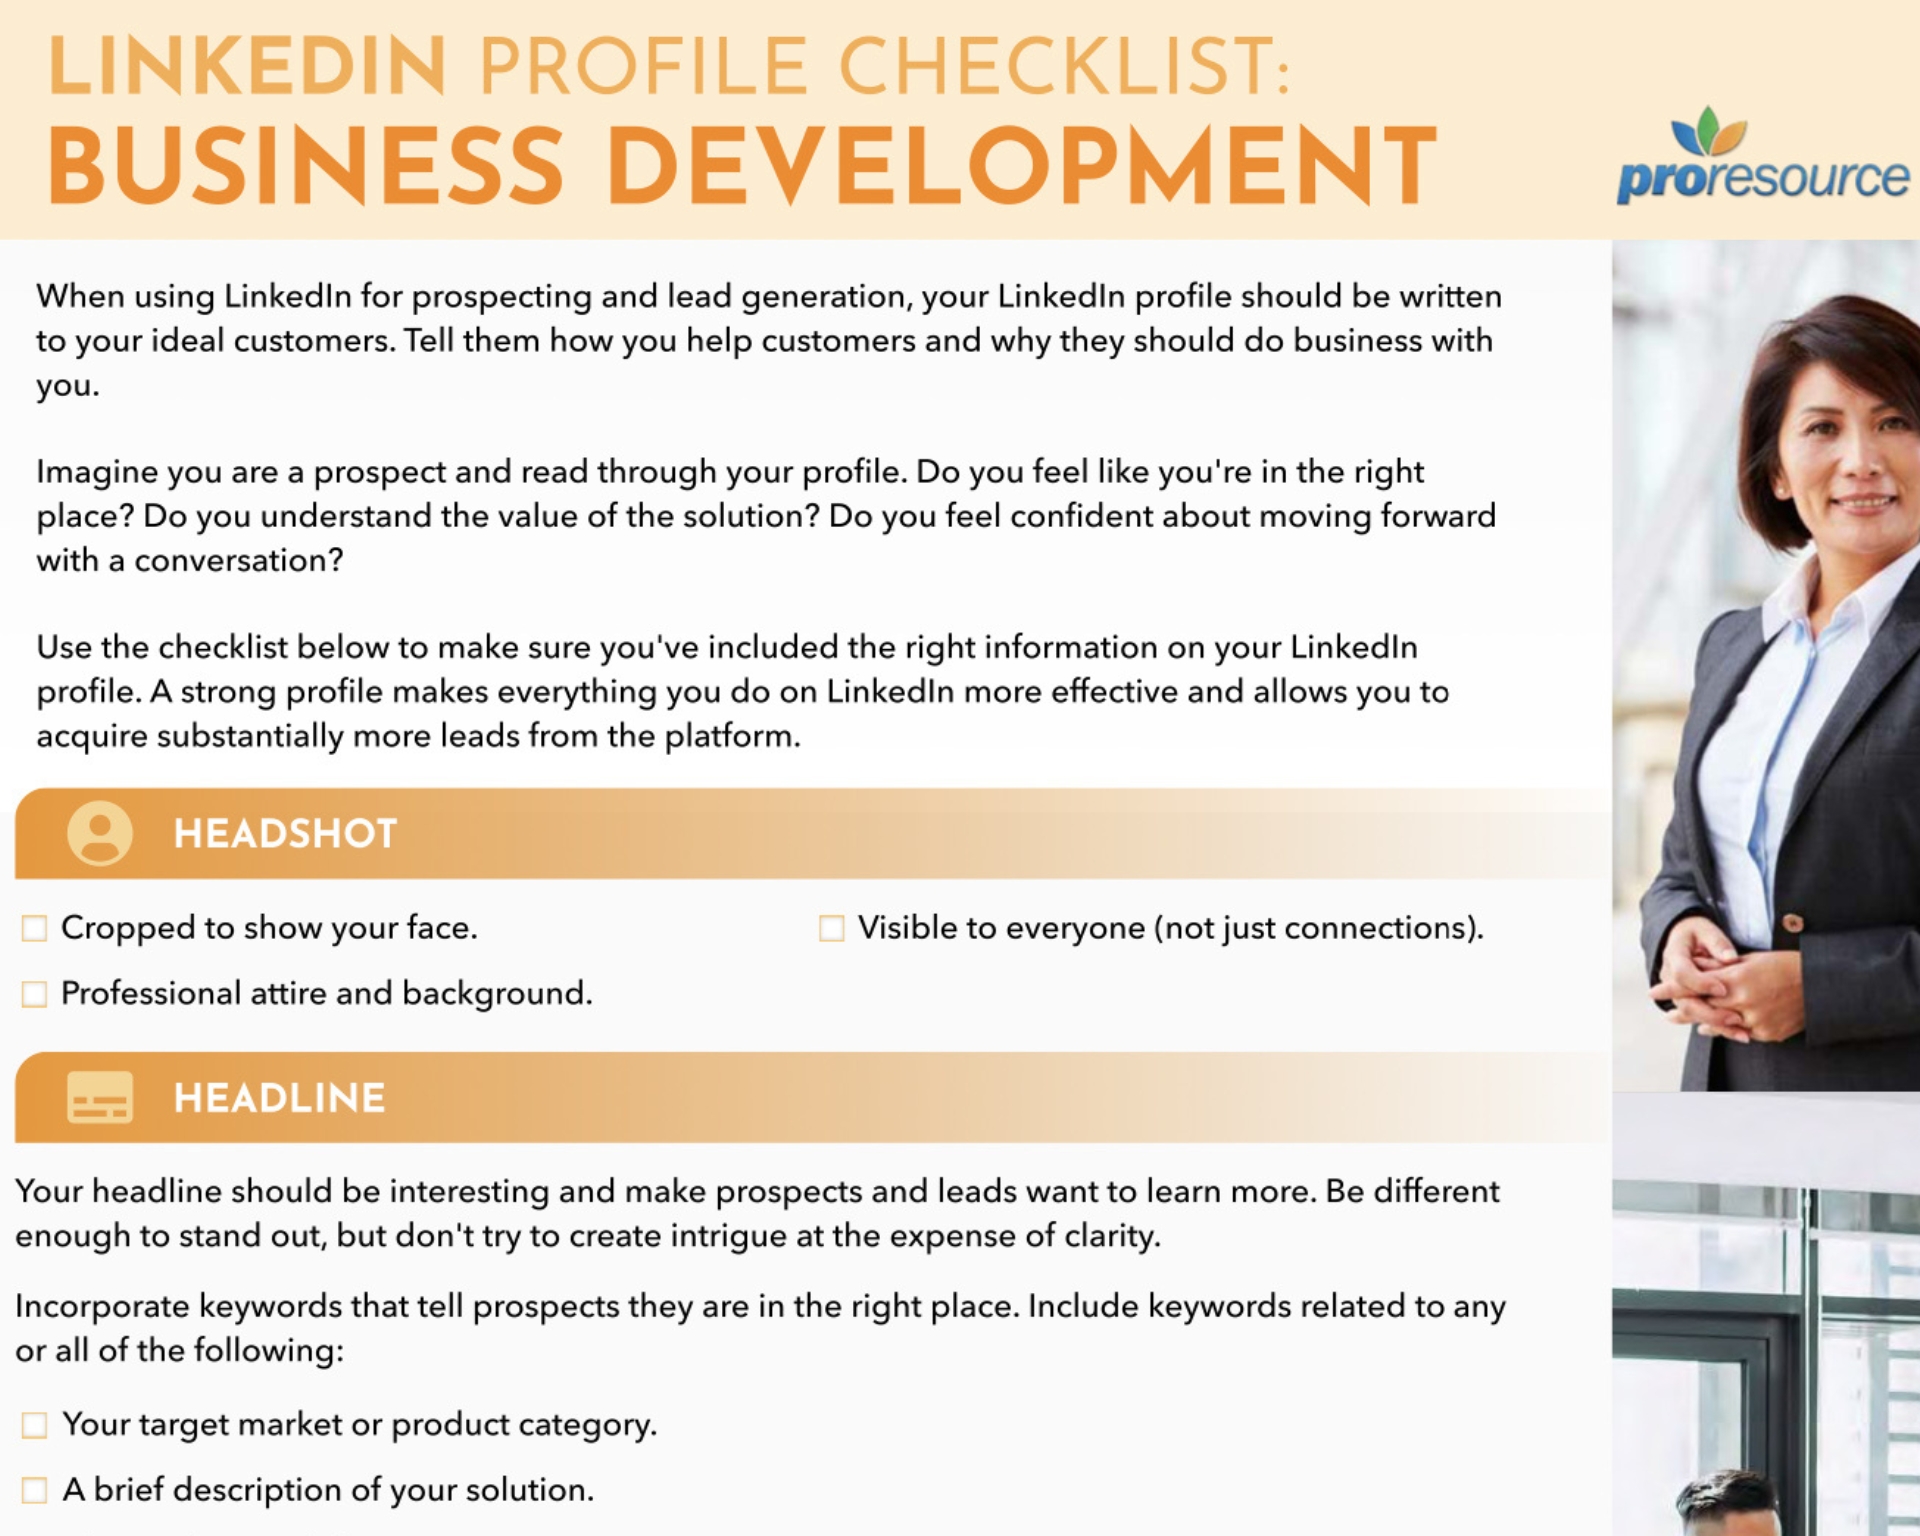 LinkedIn profile checklist for business development